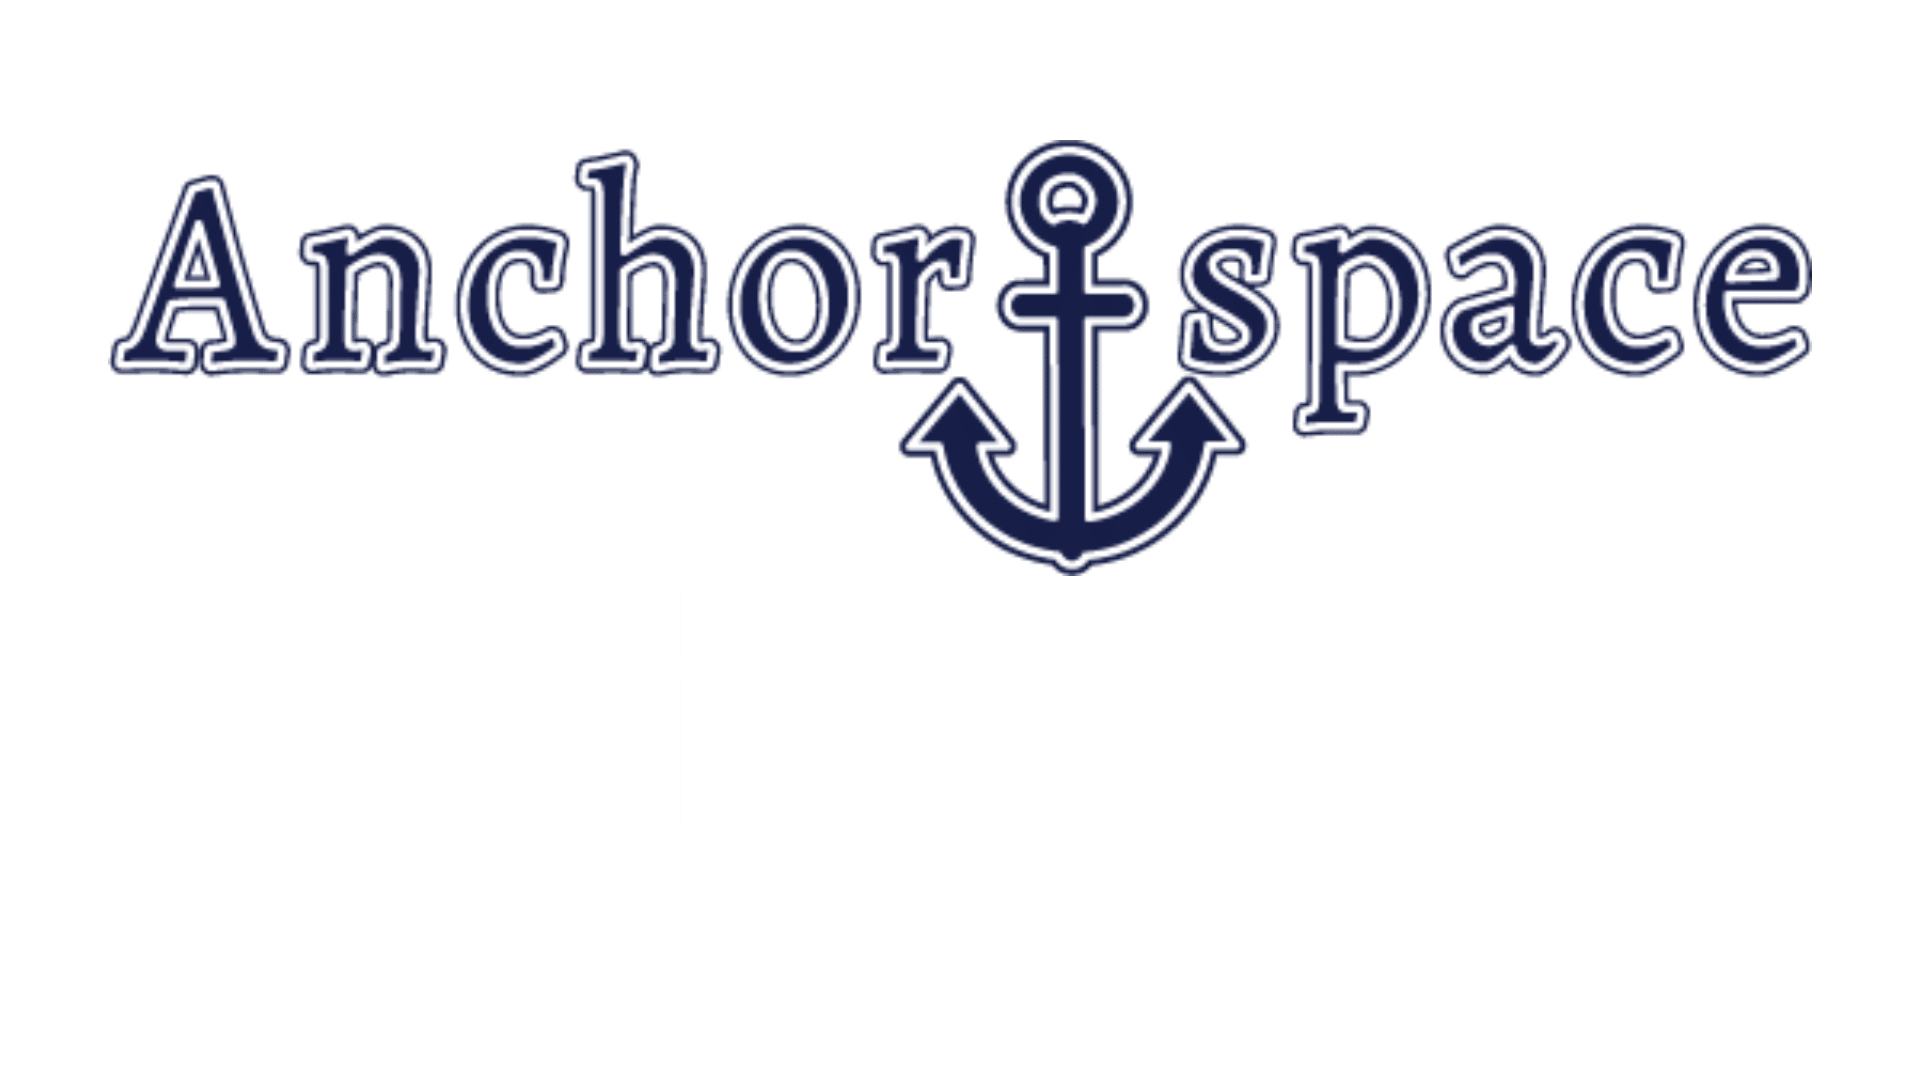 Anchorspace Potsdam